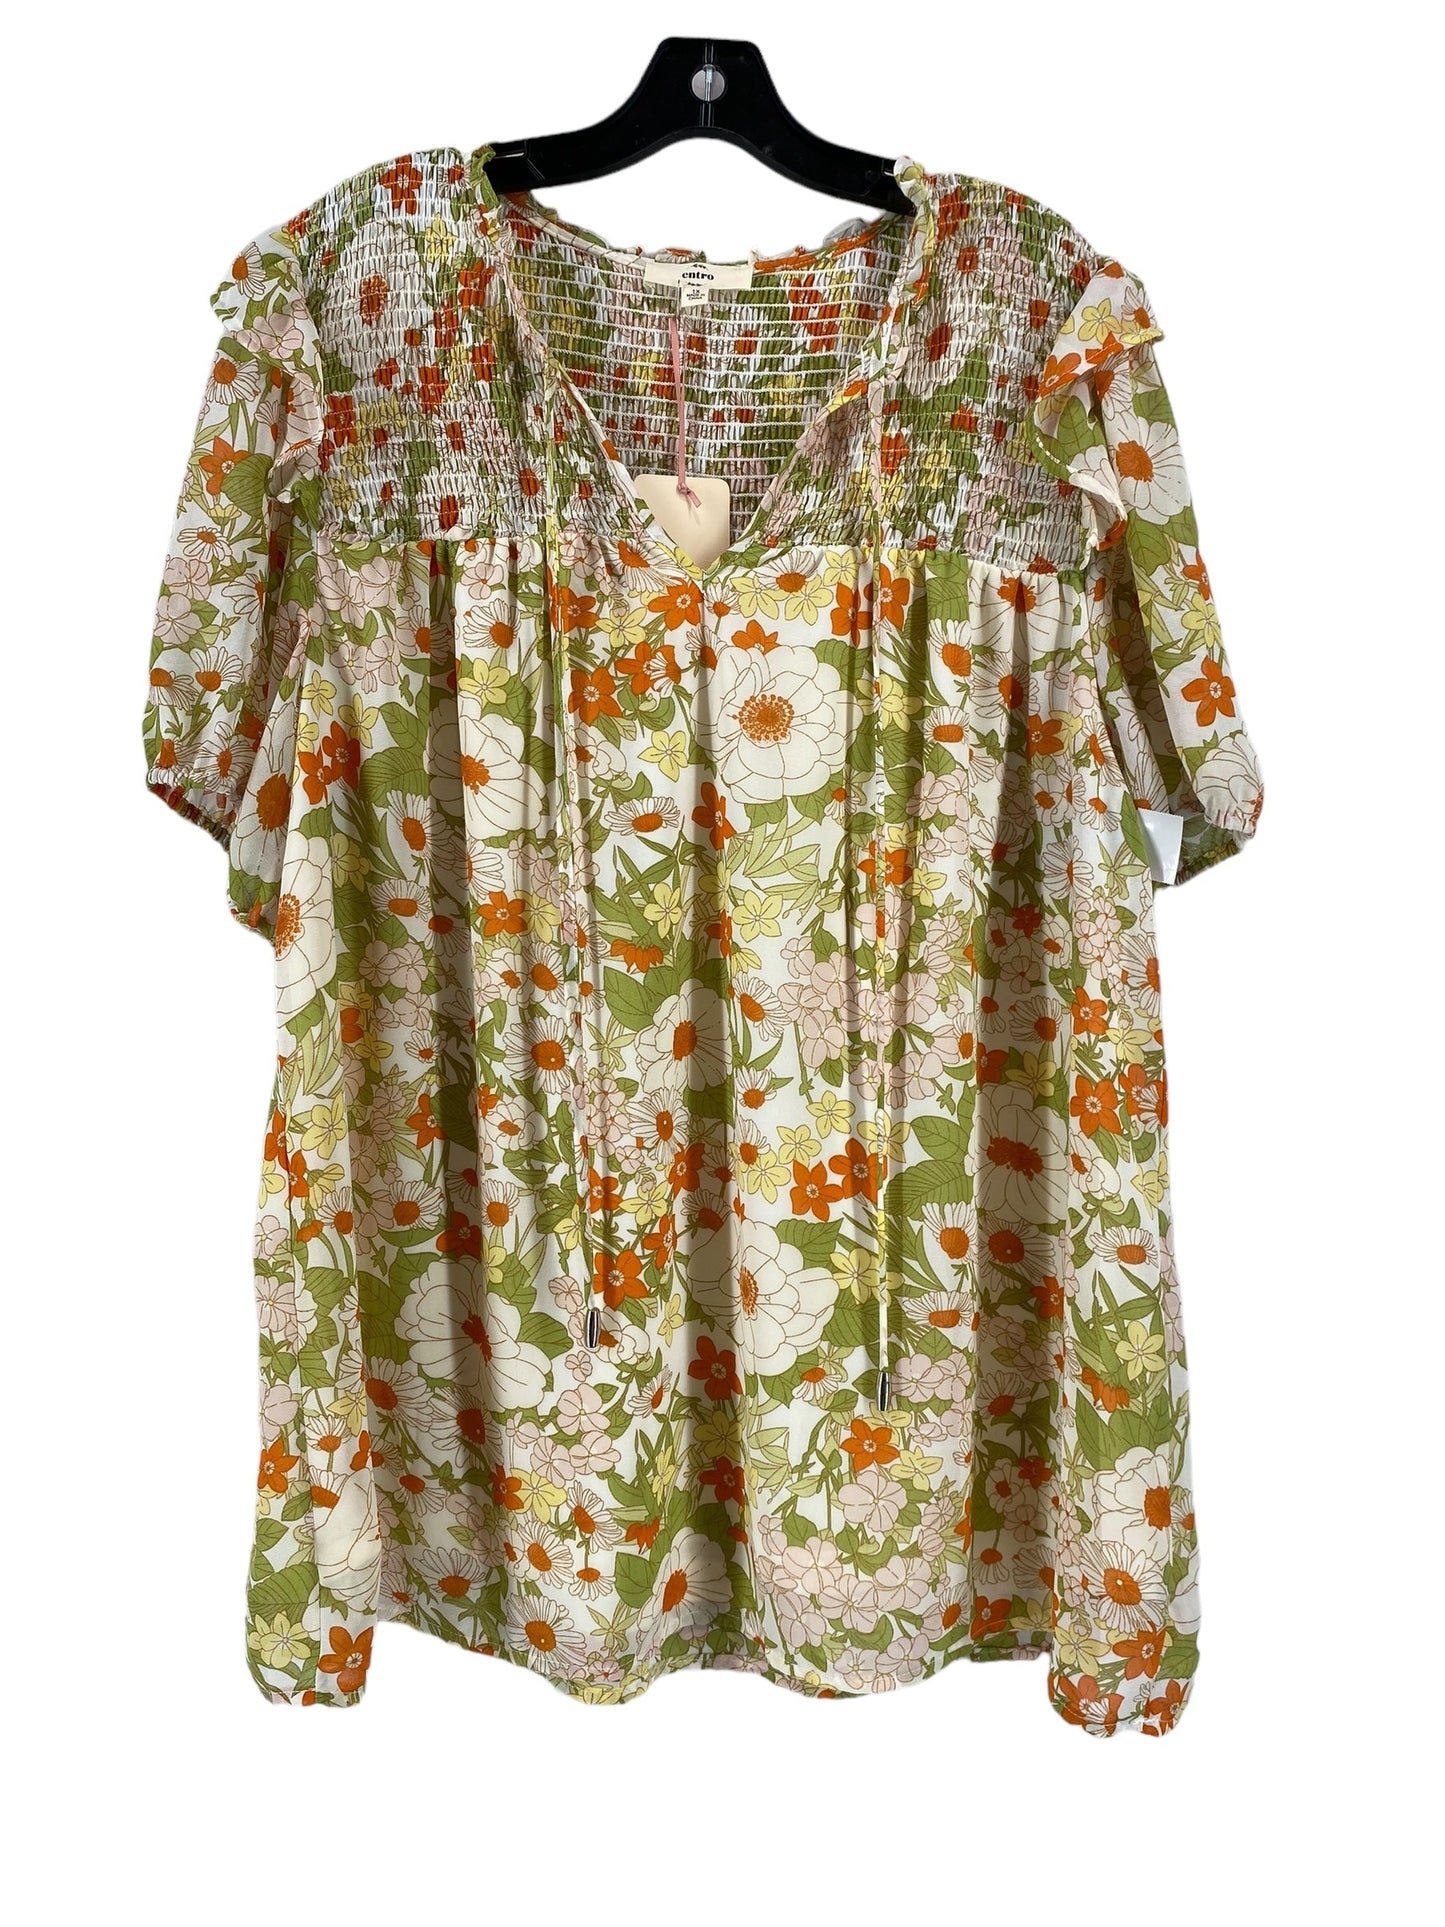 Floral Print Dress Casual Short Entro, Size 1x